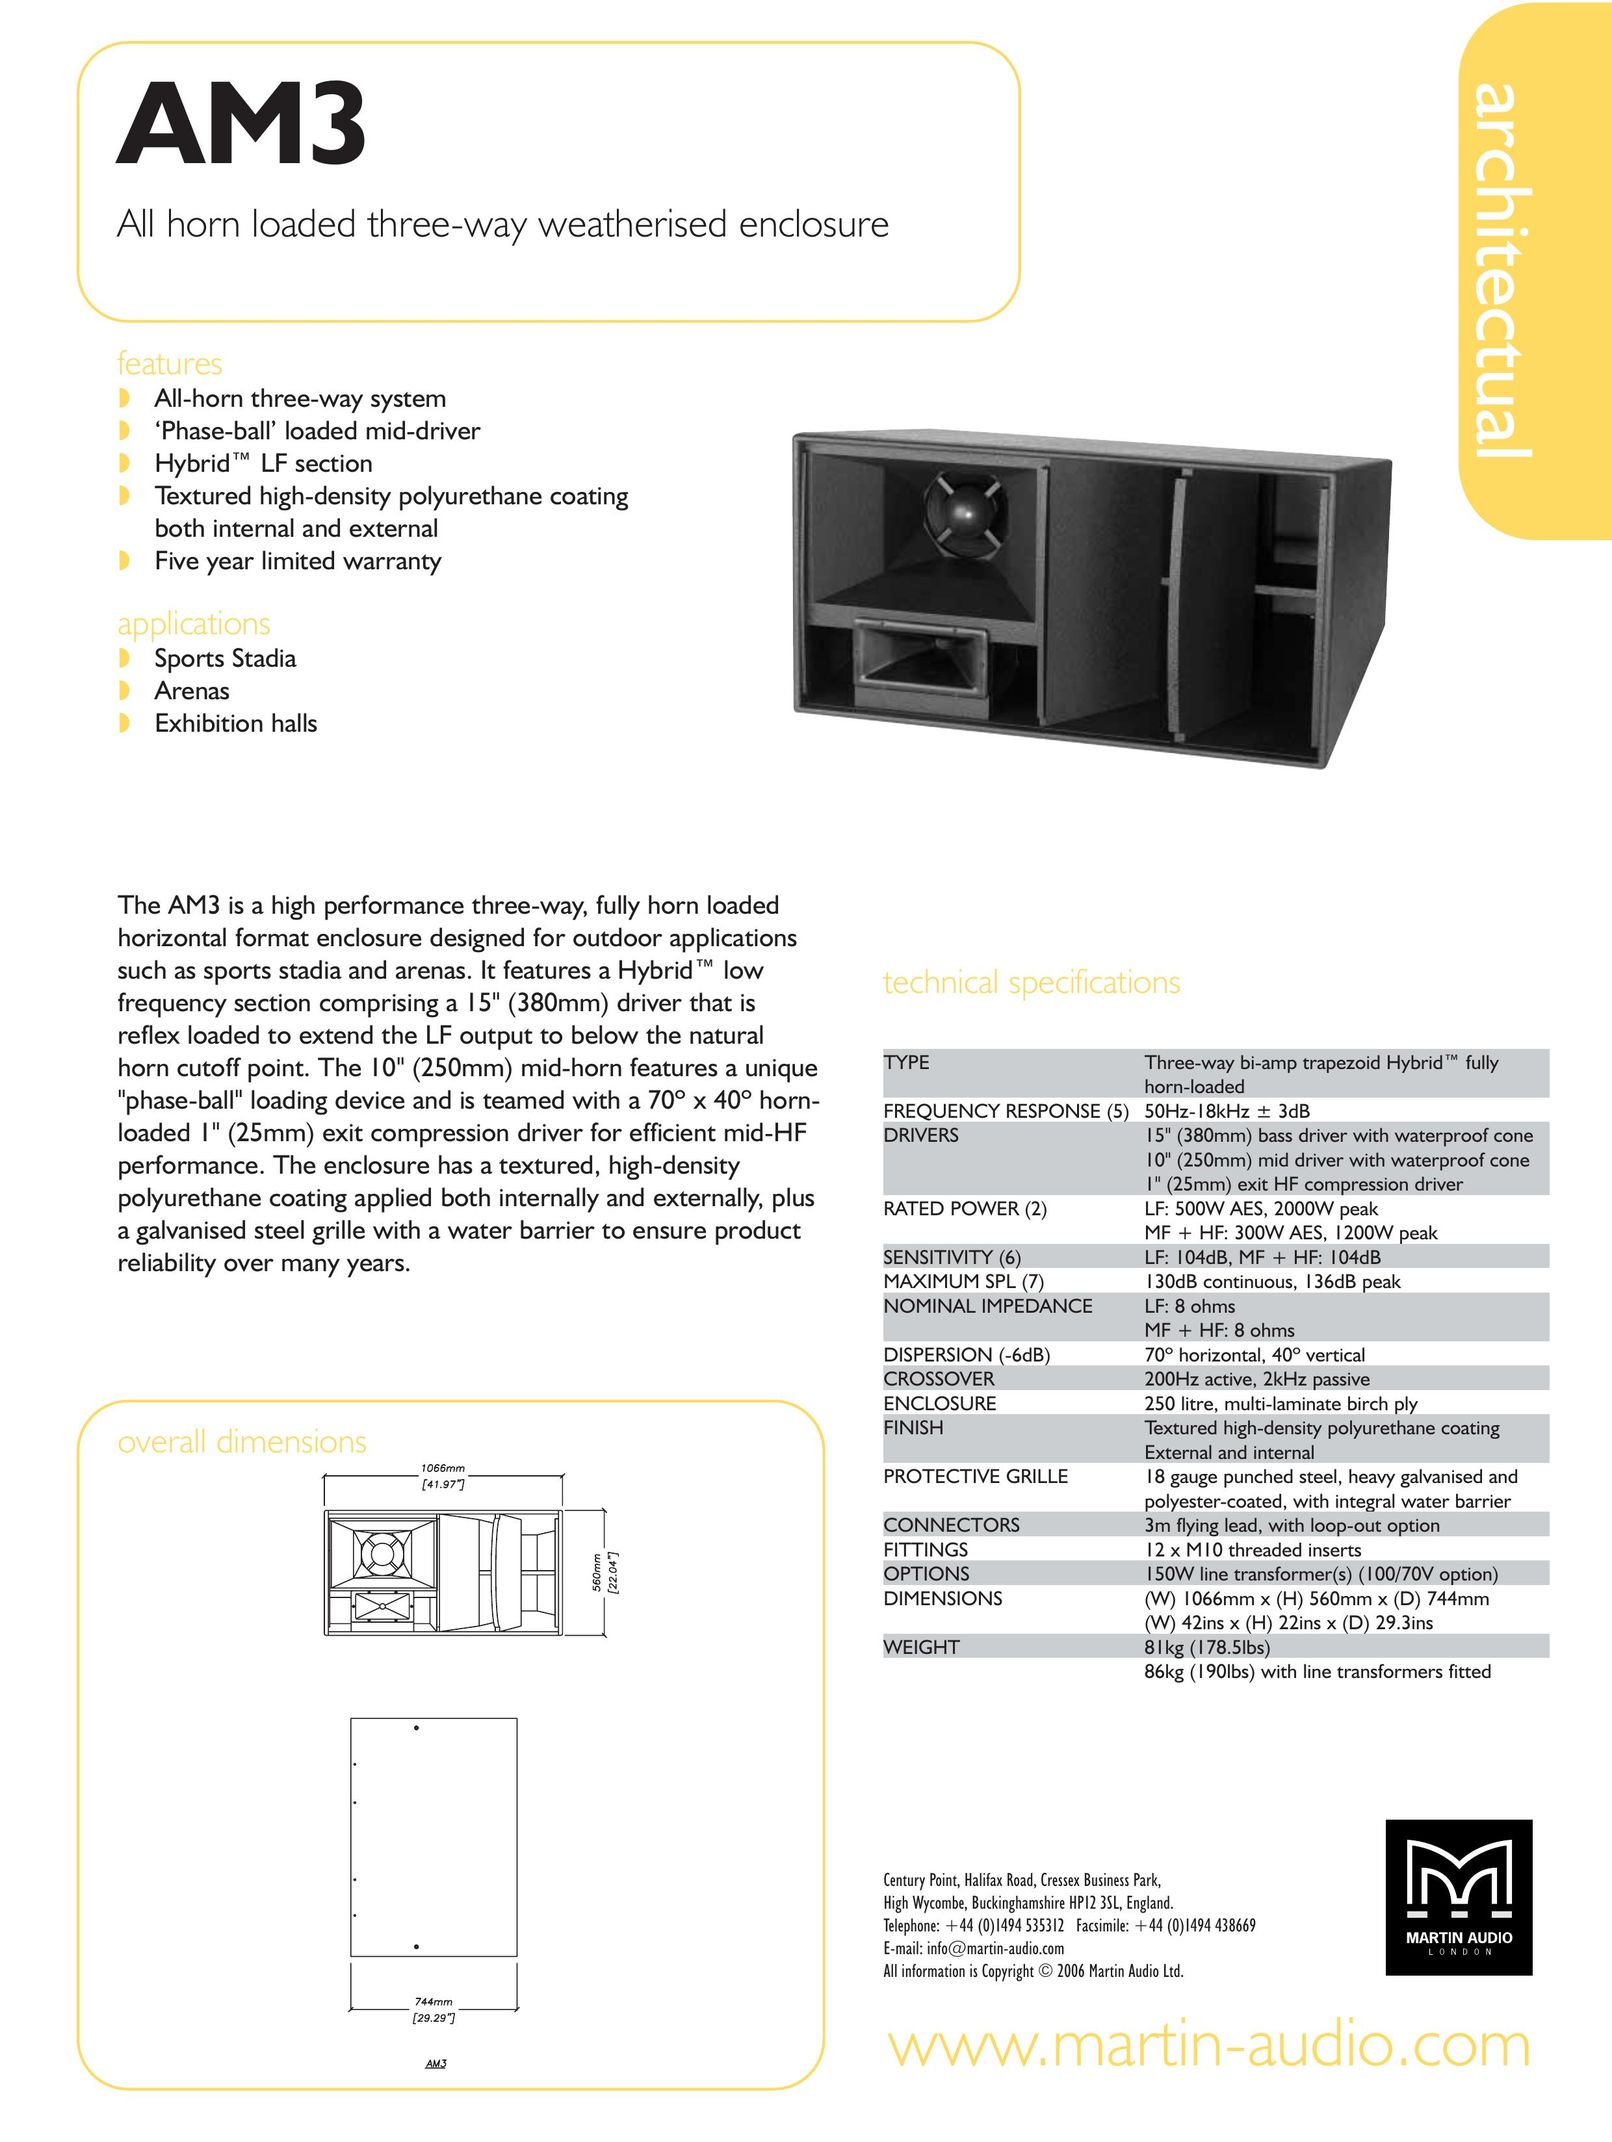 Martin Audio AM3 Speaker System User Manual